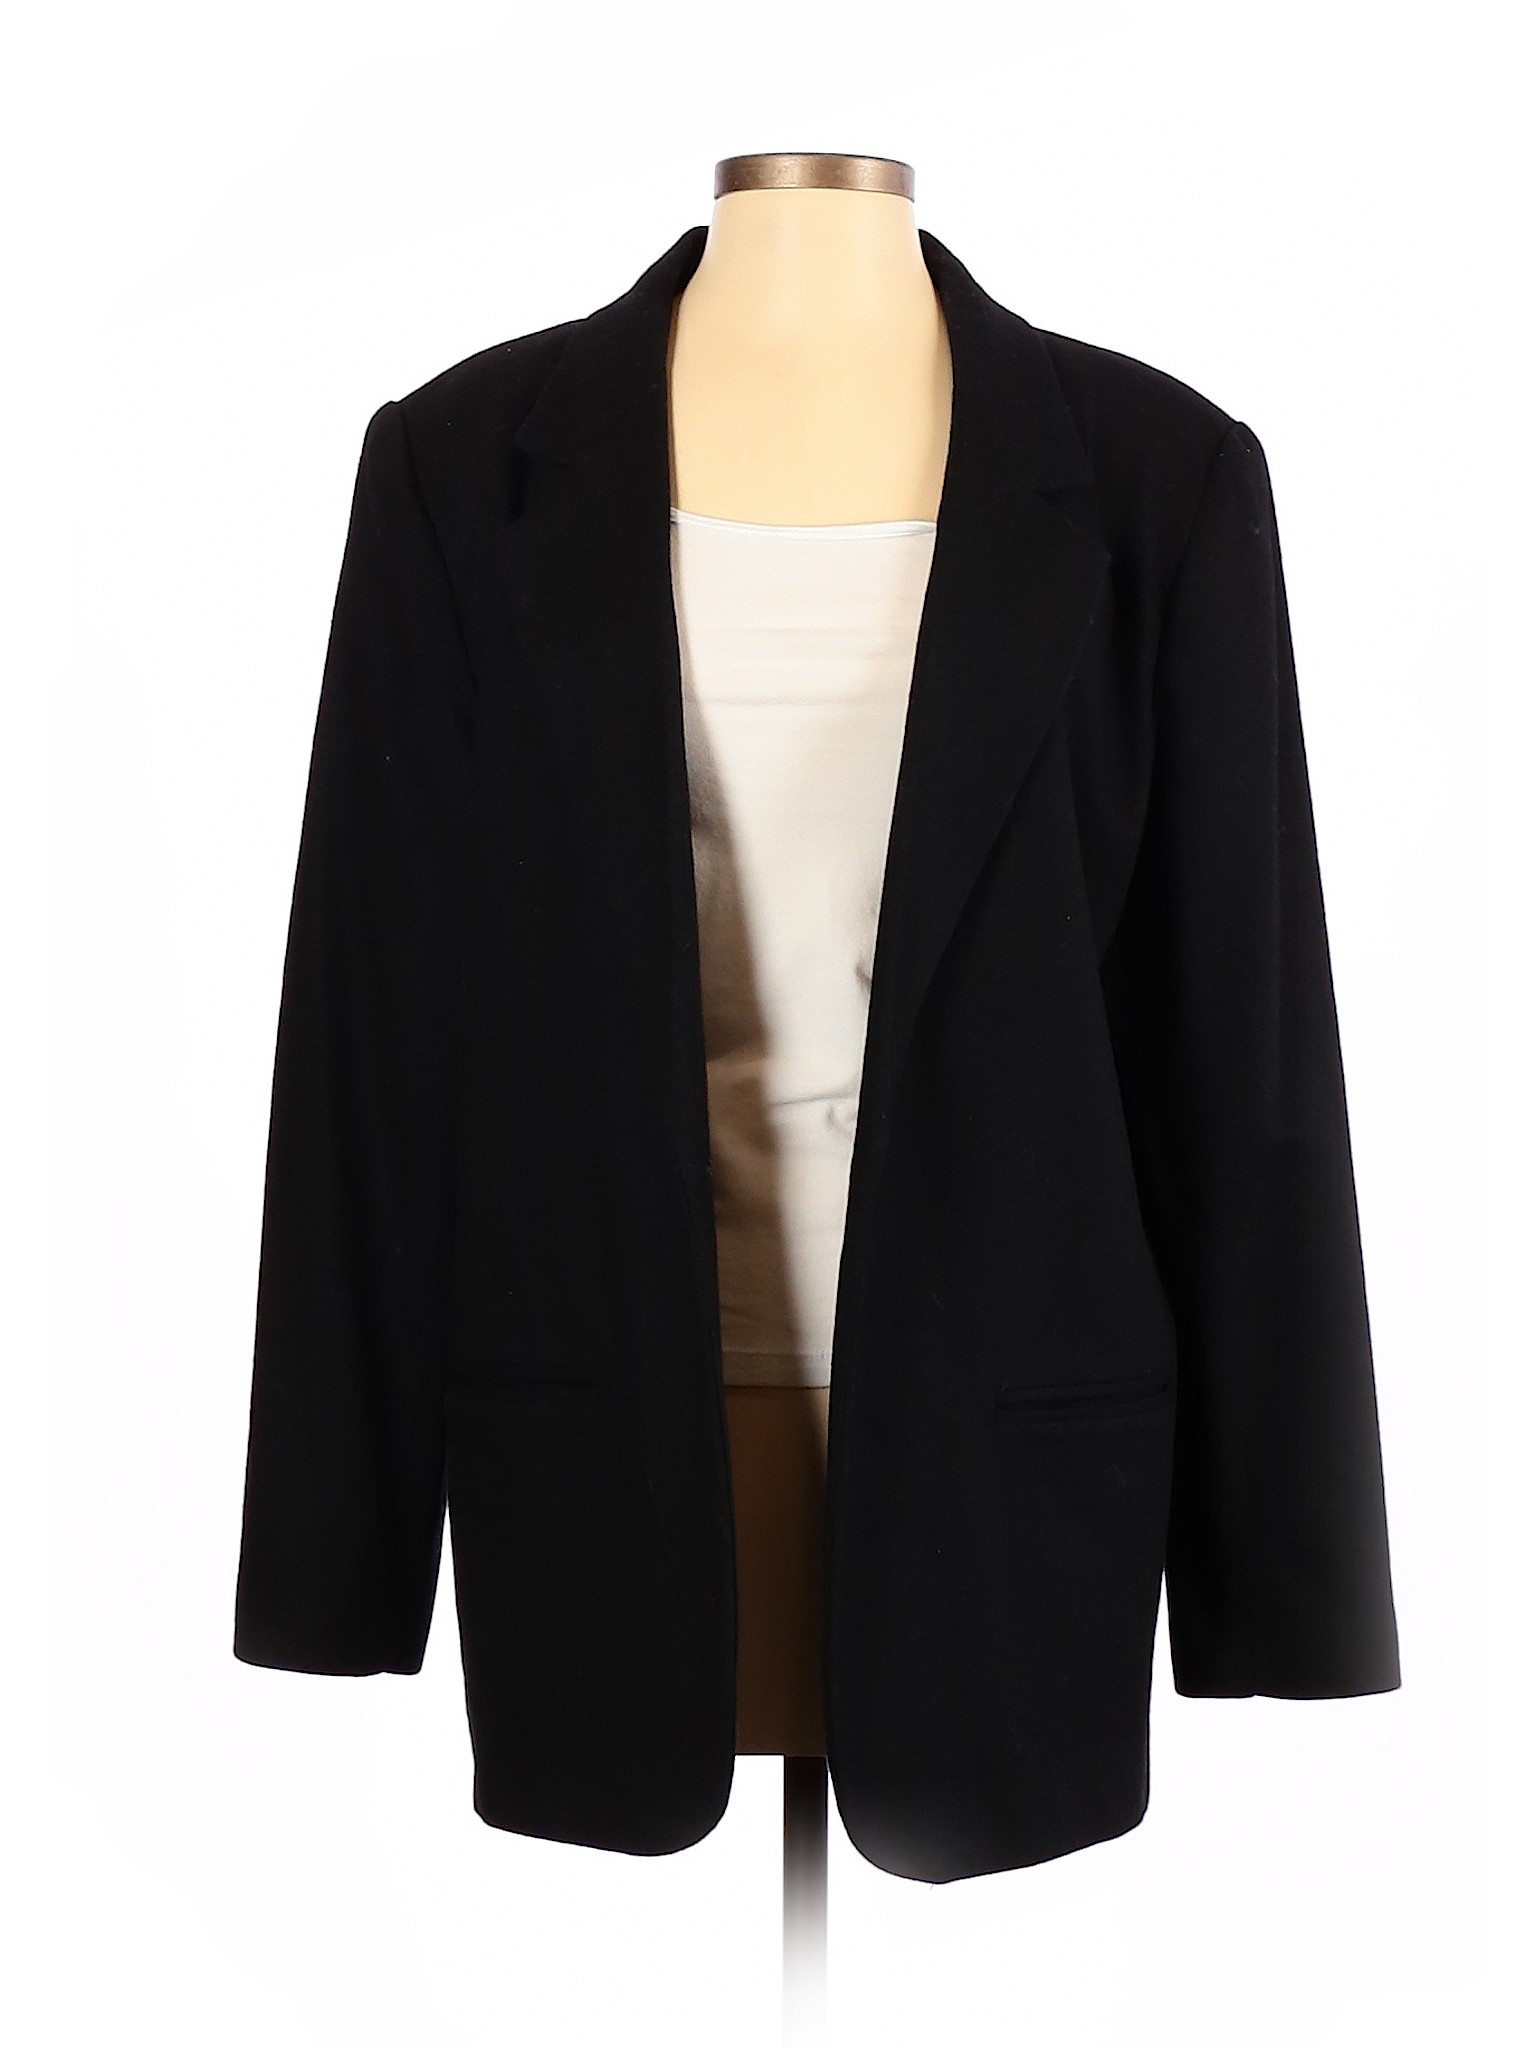 Sag Harbor Women Black Wool Blazer 6 | eBay